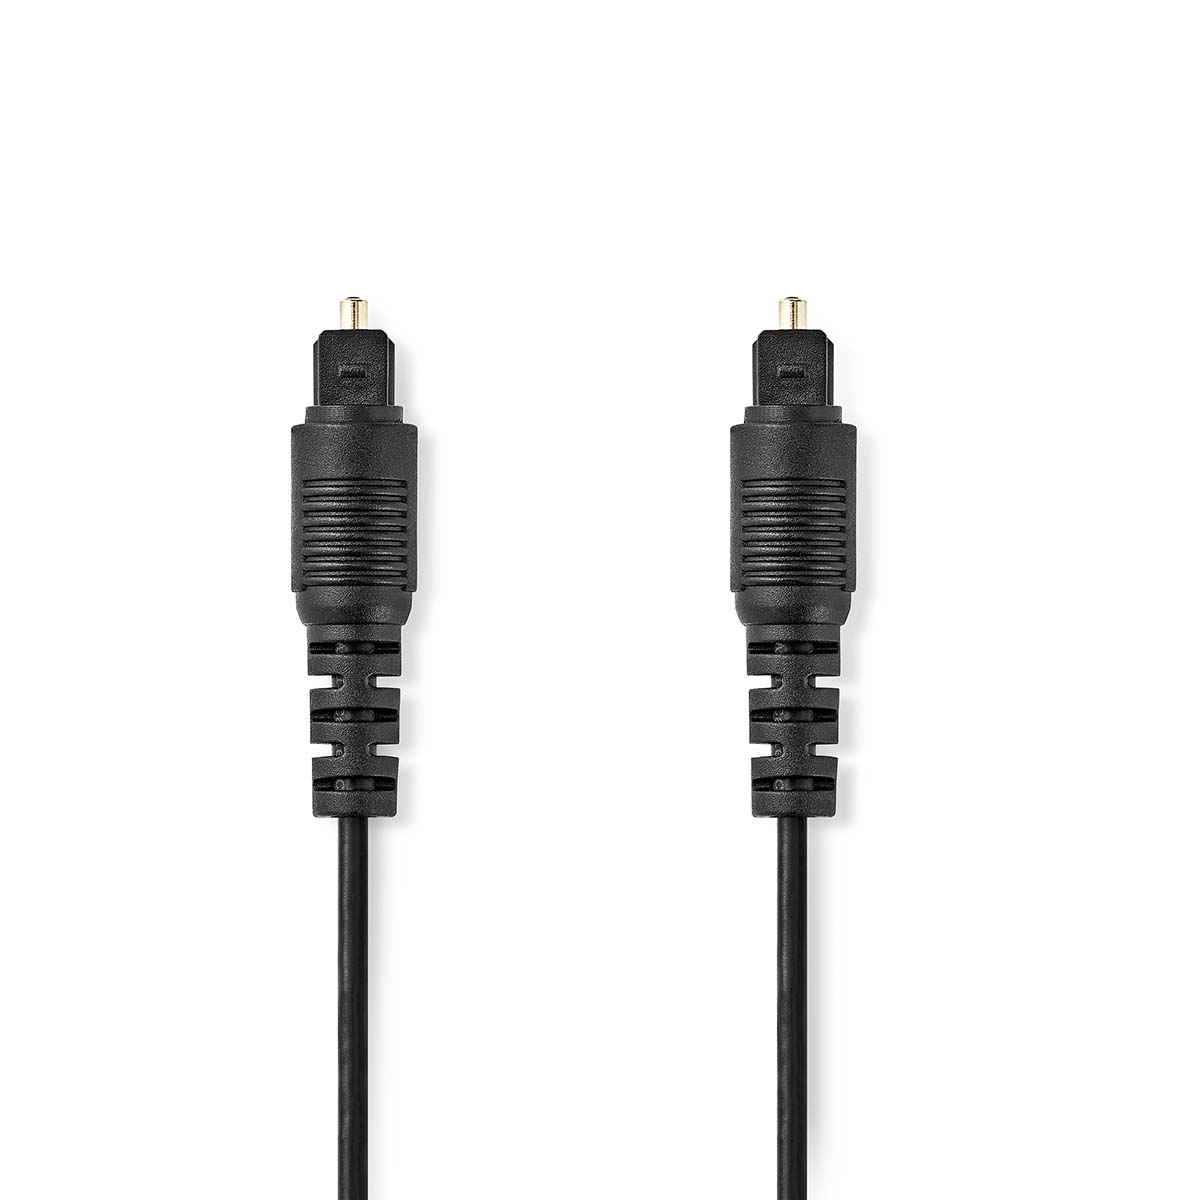 Optický audio kabel TosLink, 1m, černý CAGL25000BK30